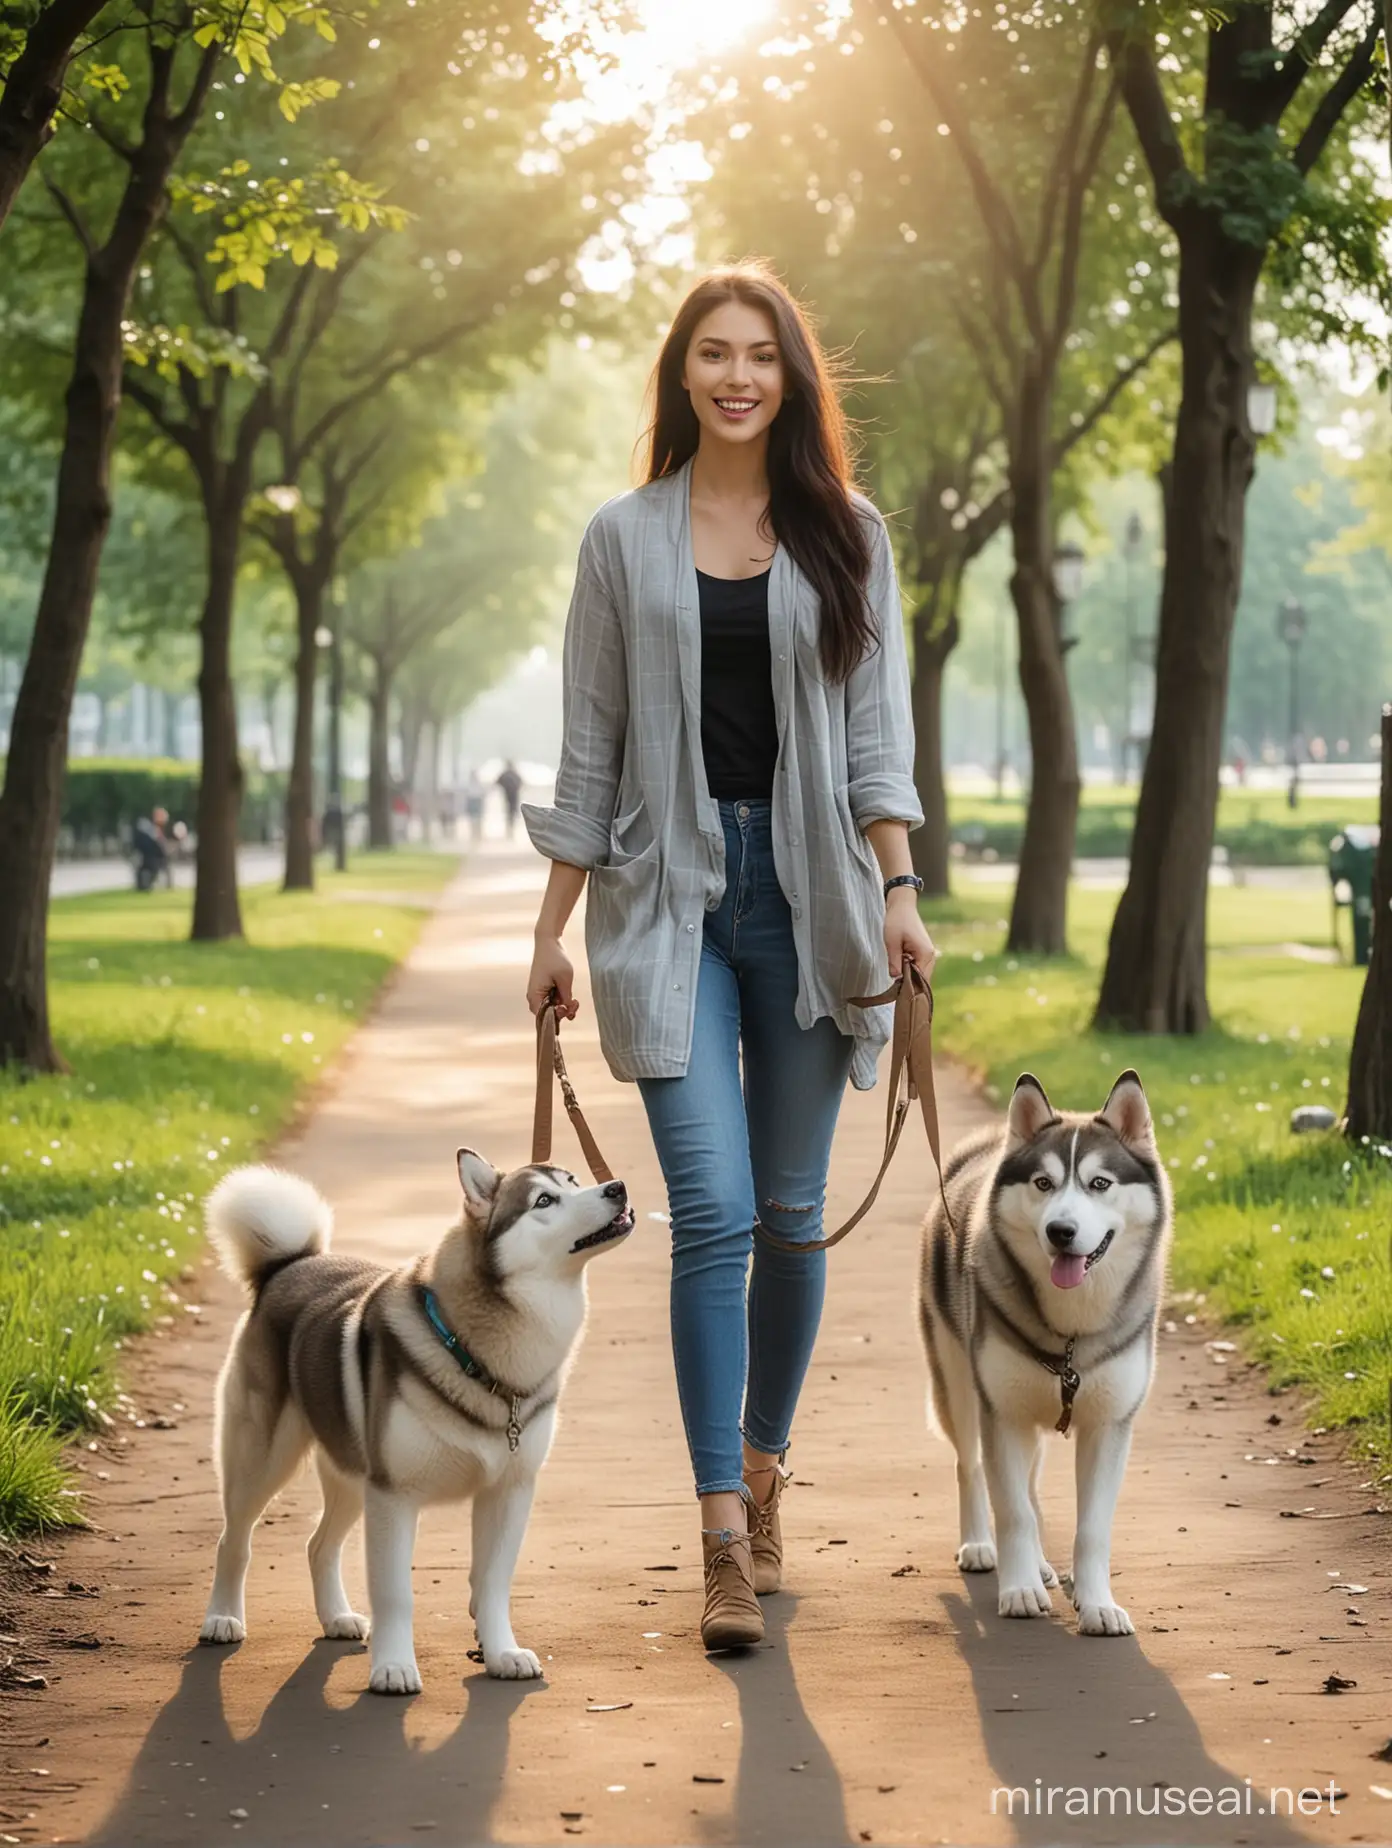 Beautiful Woman Walking with Husky in Lush Green Park Morning Stroll 4K Photo